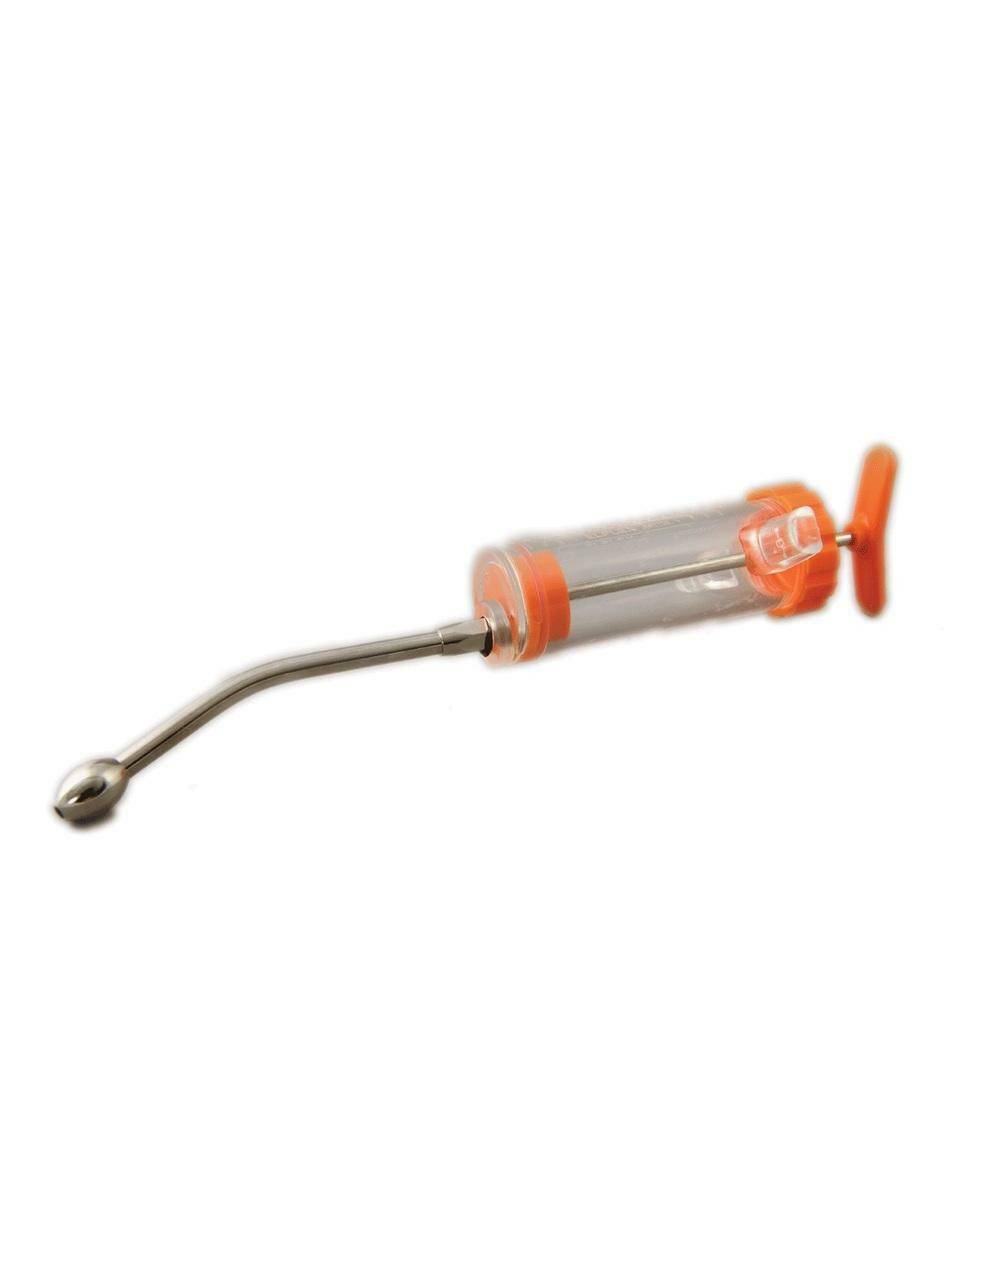 30ml Drencher Nylon Syringe and Nozzle - UKMEDI